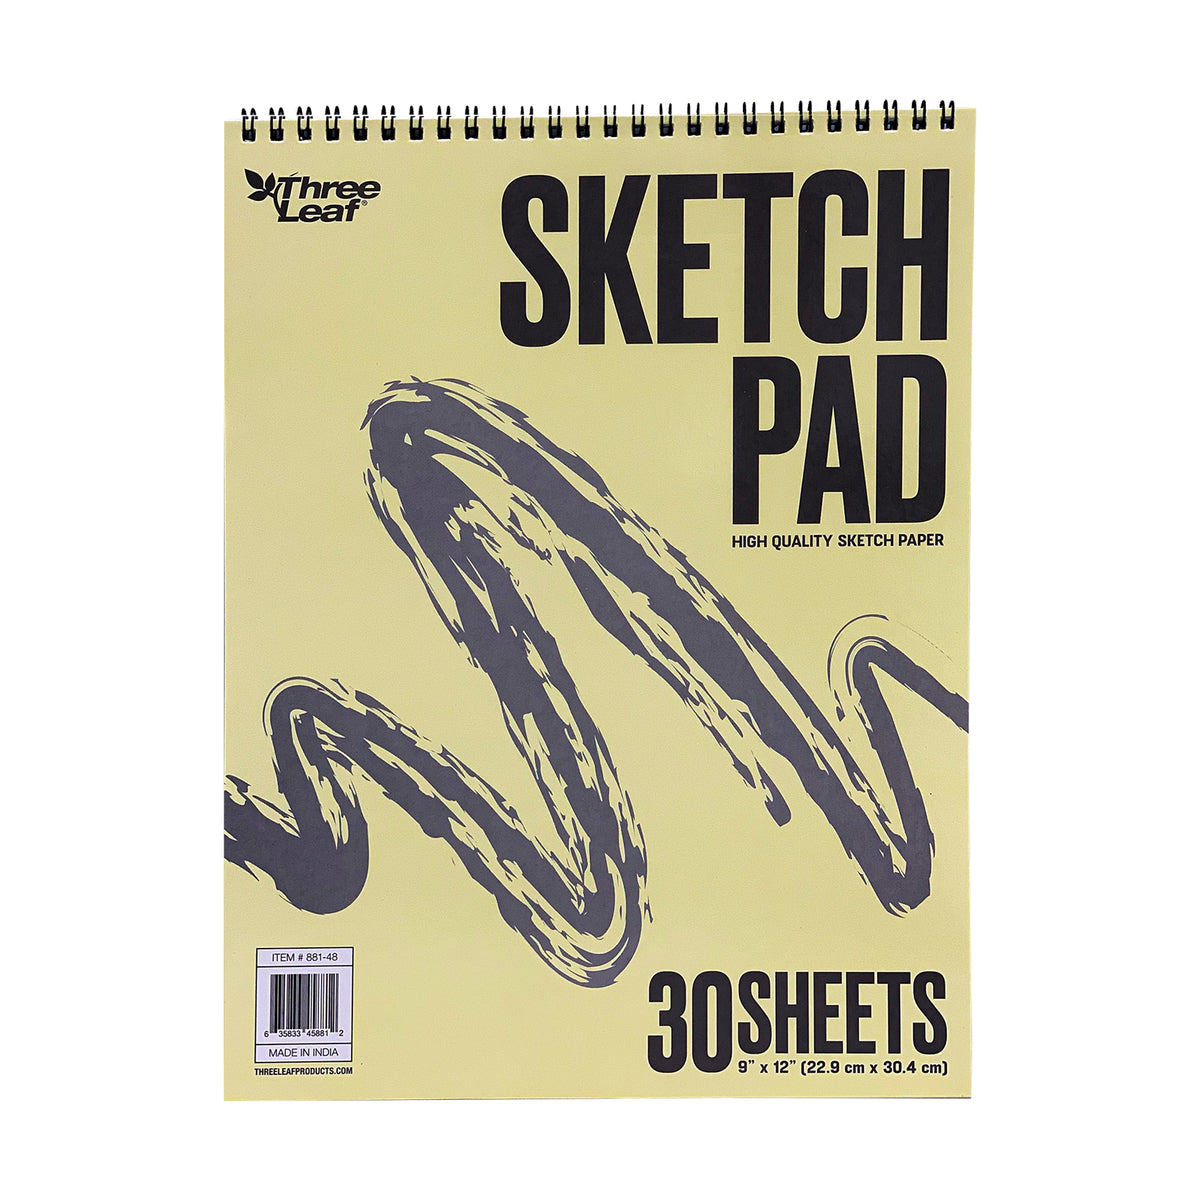 9 x 12 Sketch Book, Top Spiral Bound Sketch Pad, 2 Packs 100